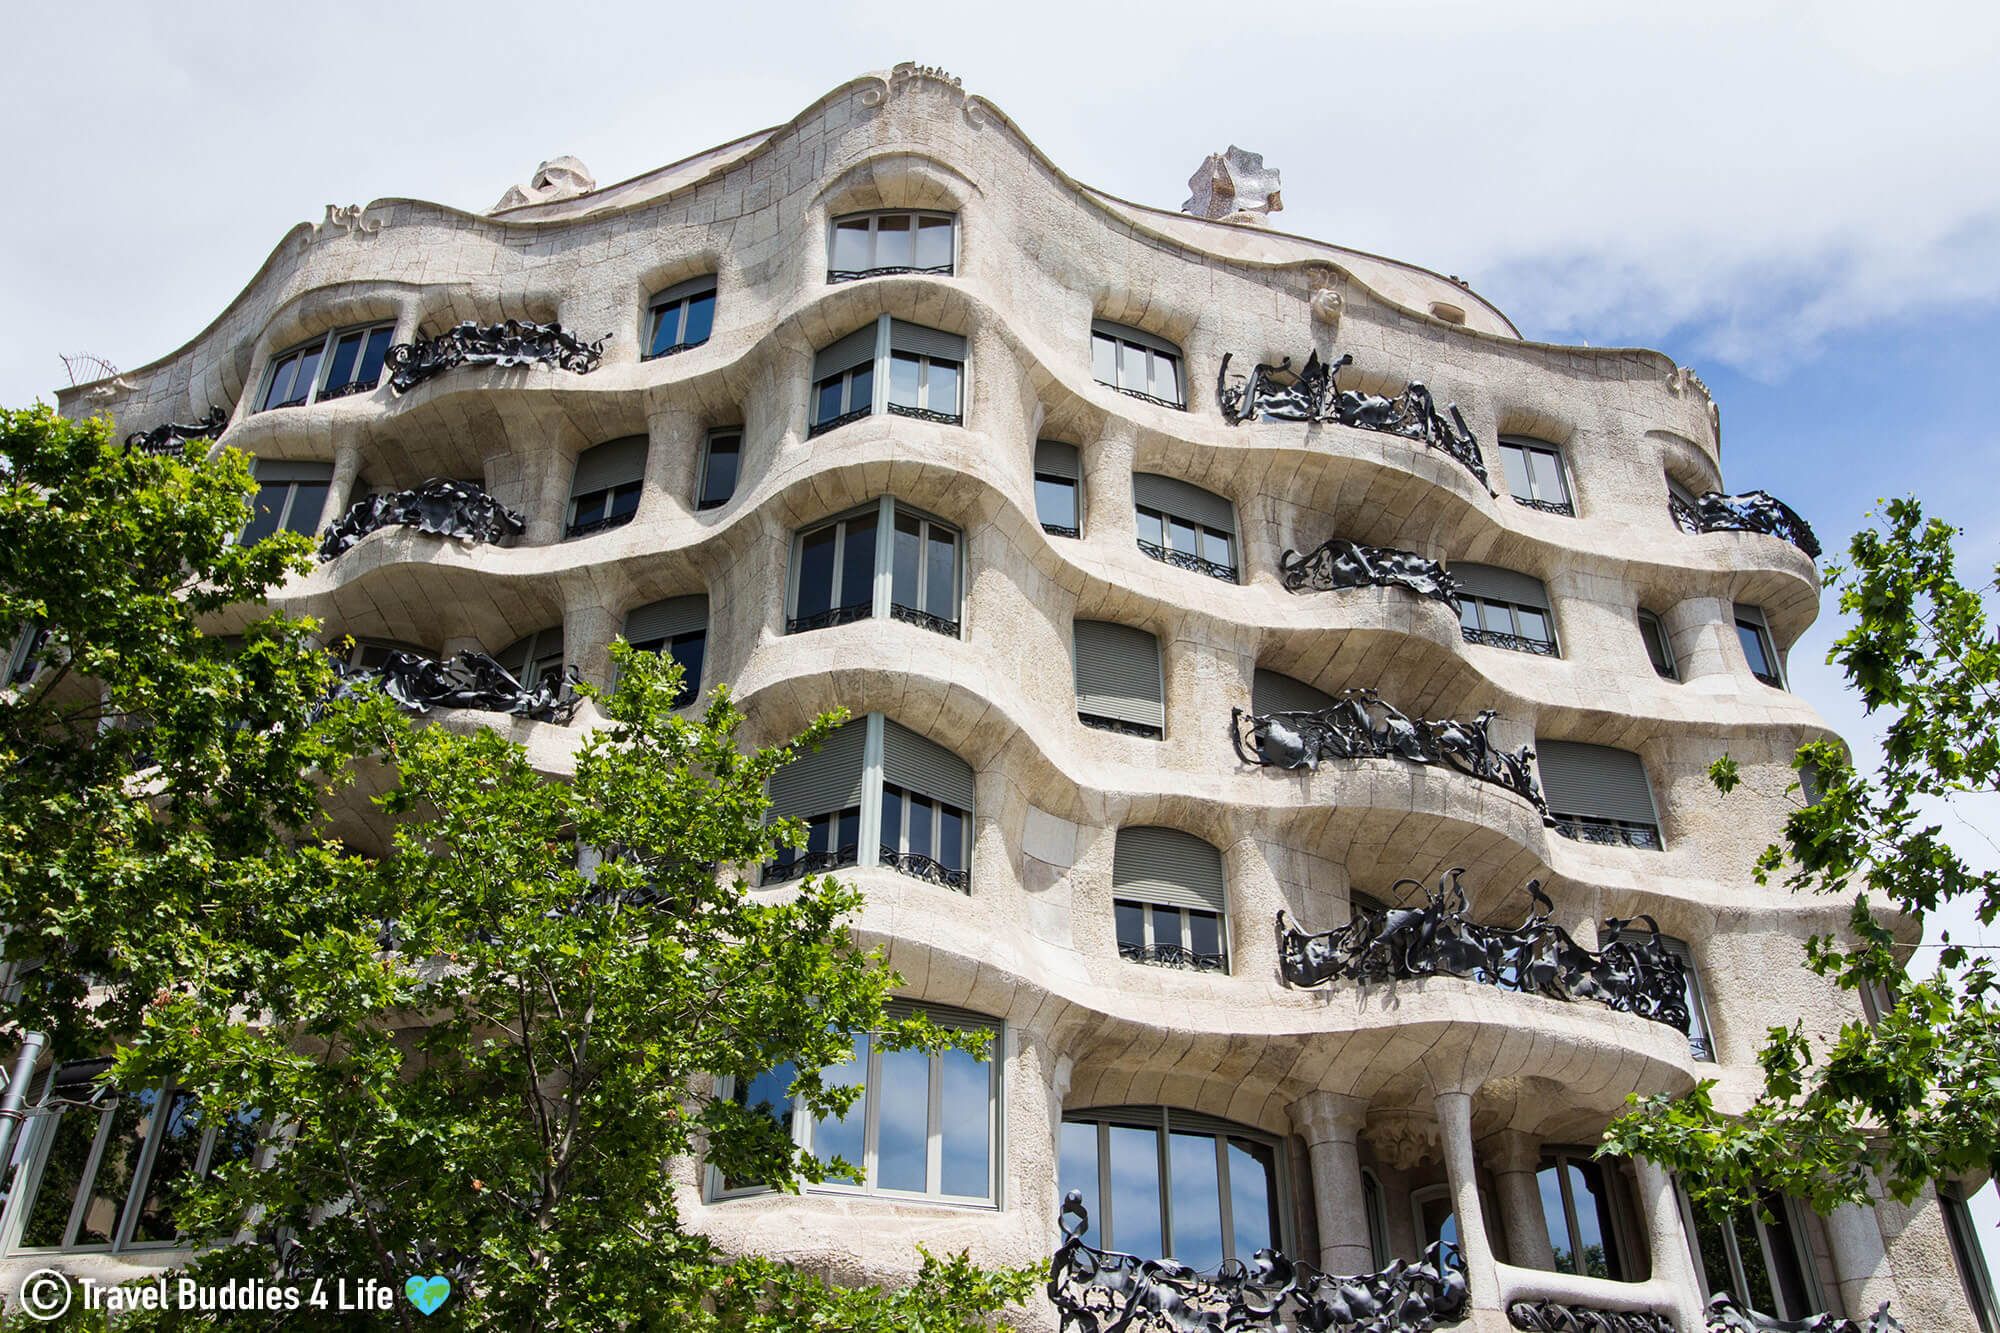 Casa Mila Mansion in Barcelona, Spain, Europe